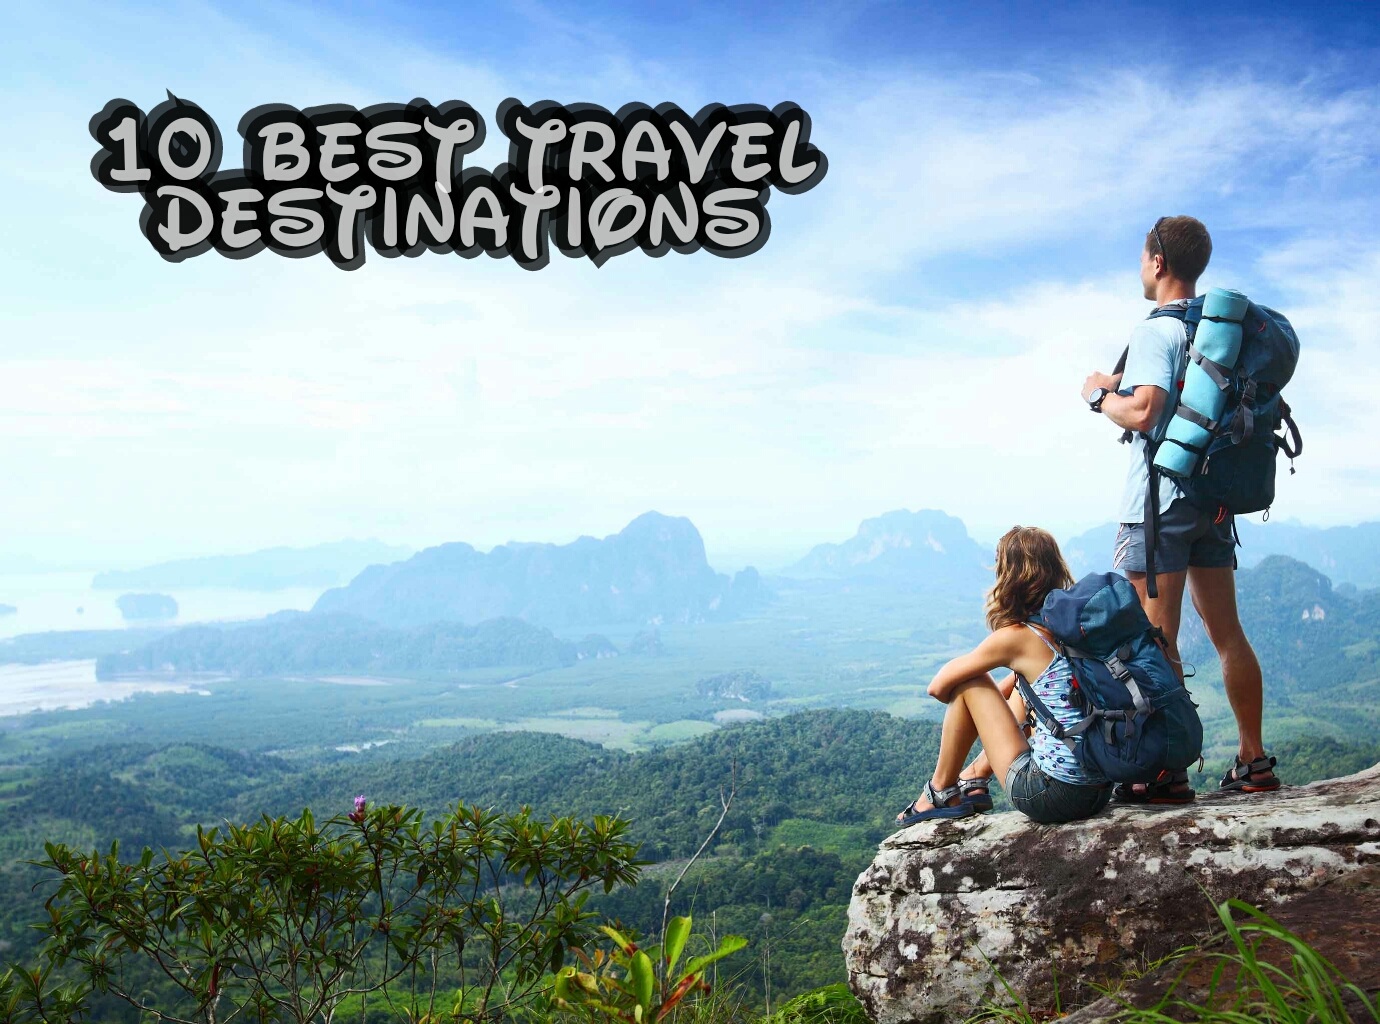 best travel destinations for 4 days